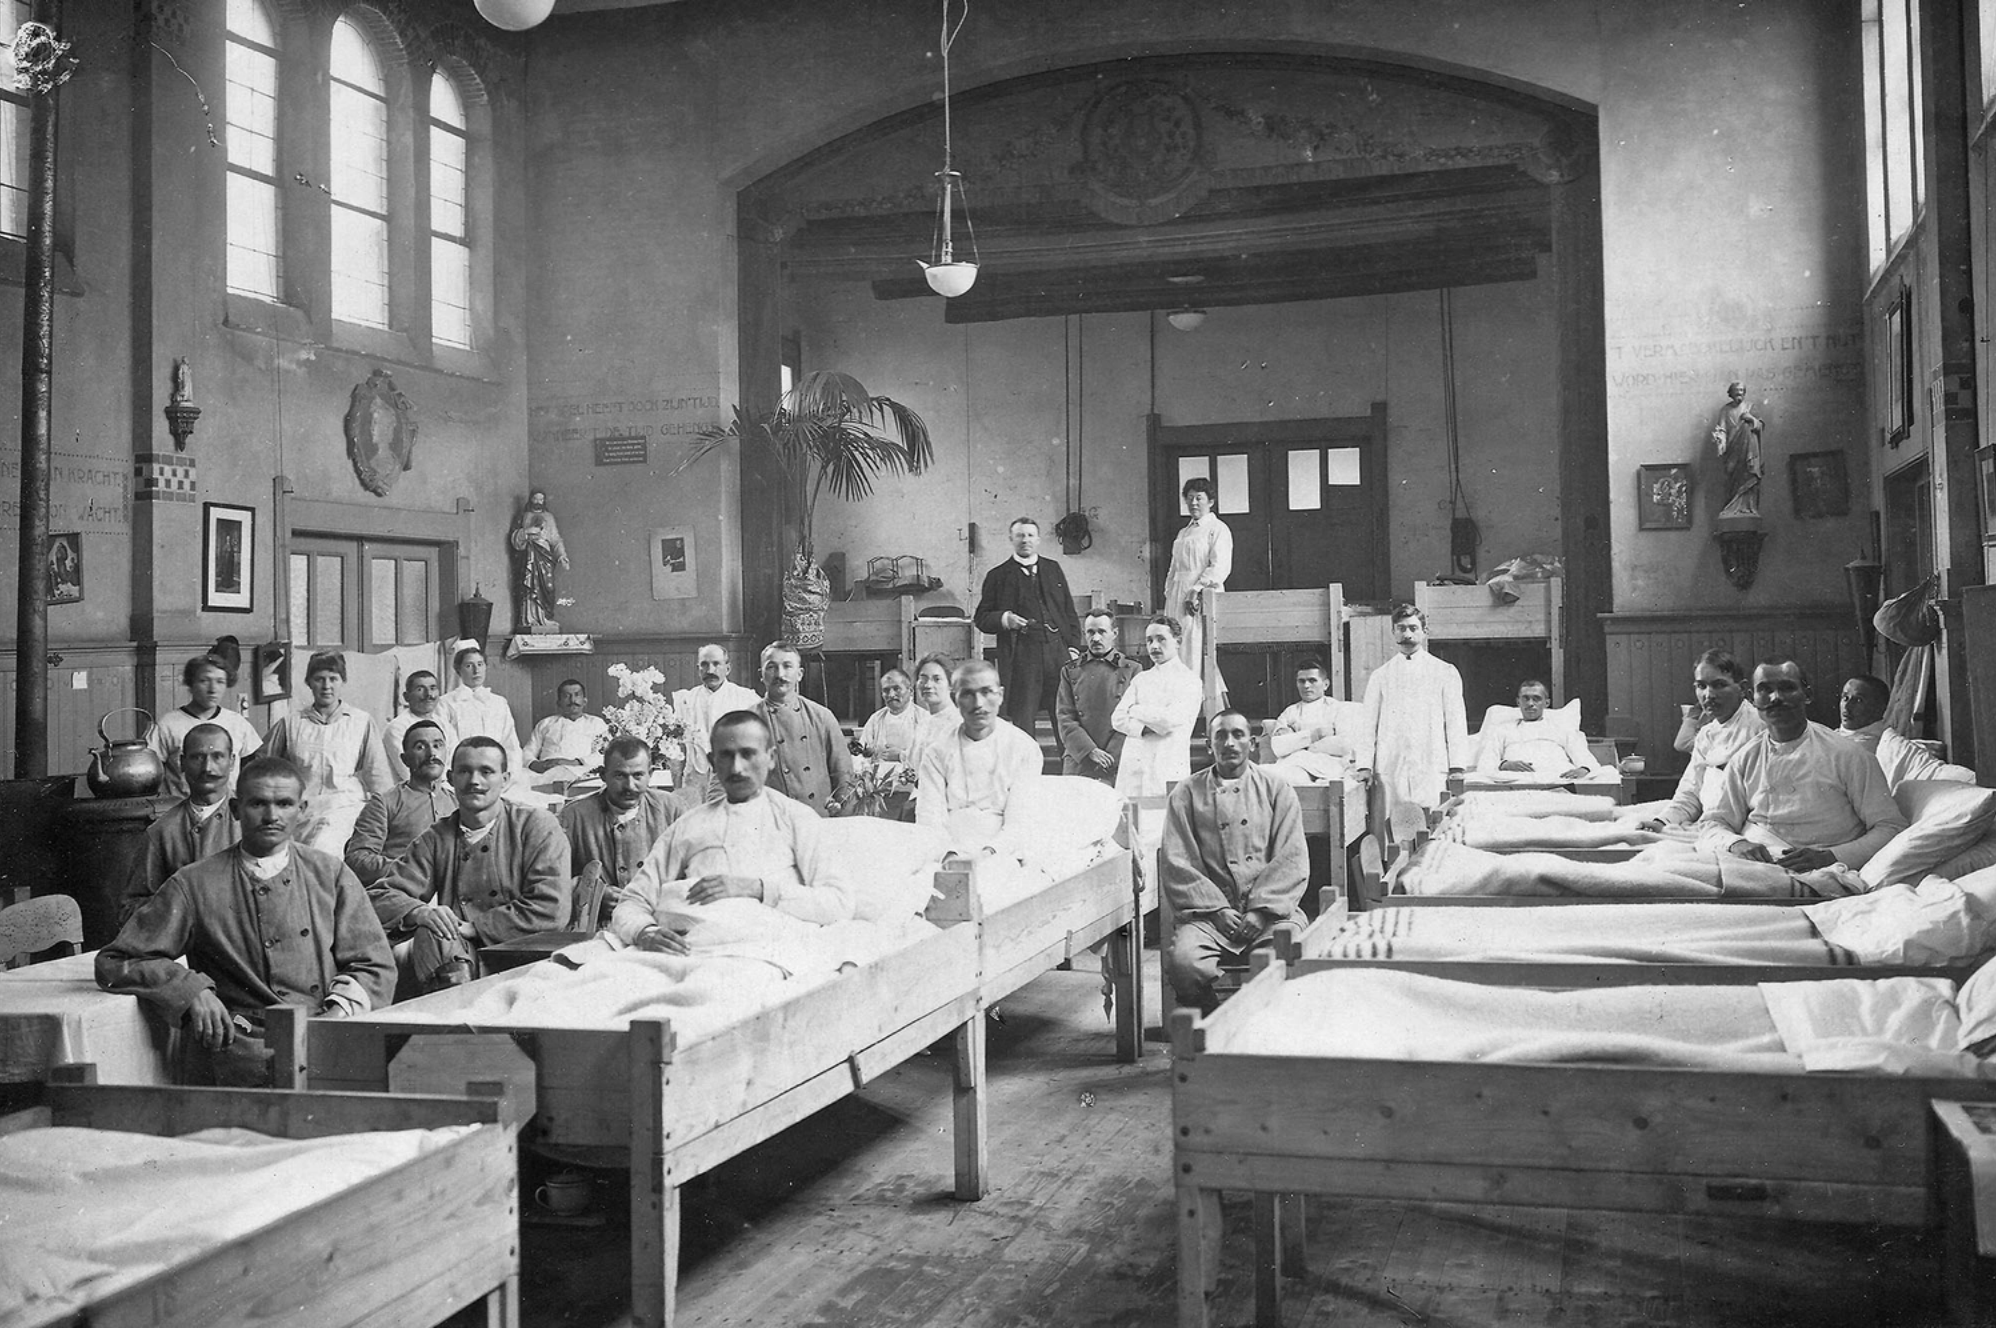 История госпиталей. Испанка Пандемия 20 века. Испанка, 1918 - 20, Пандемия гриппа.